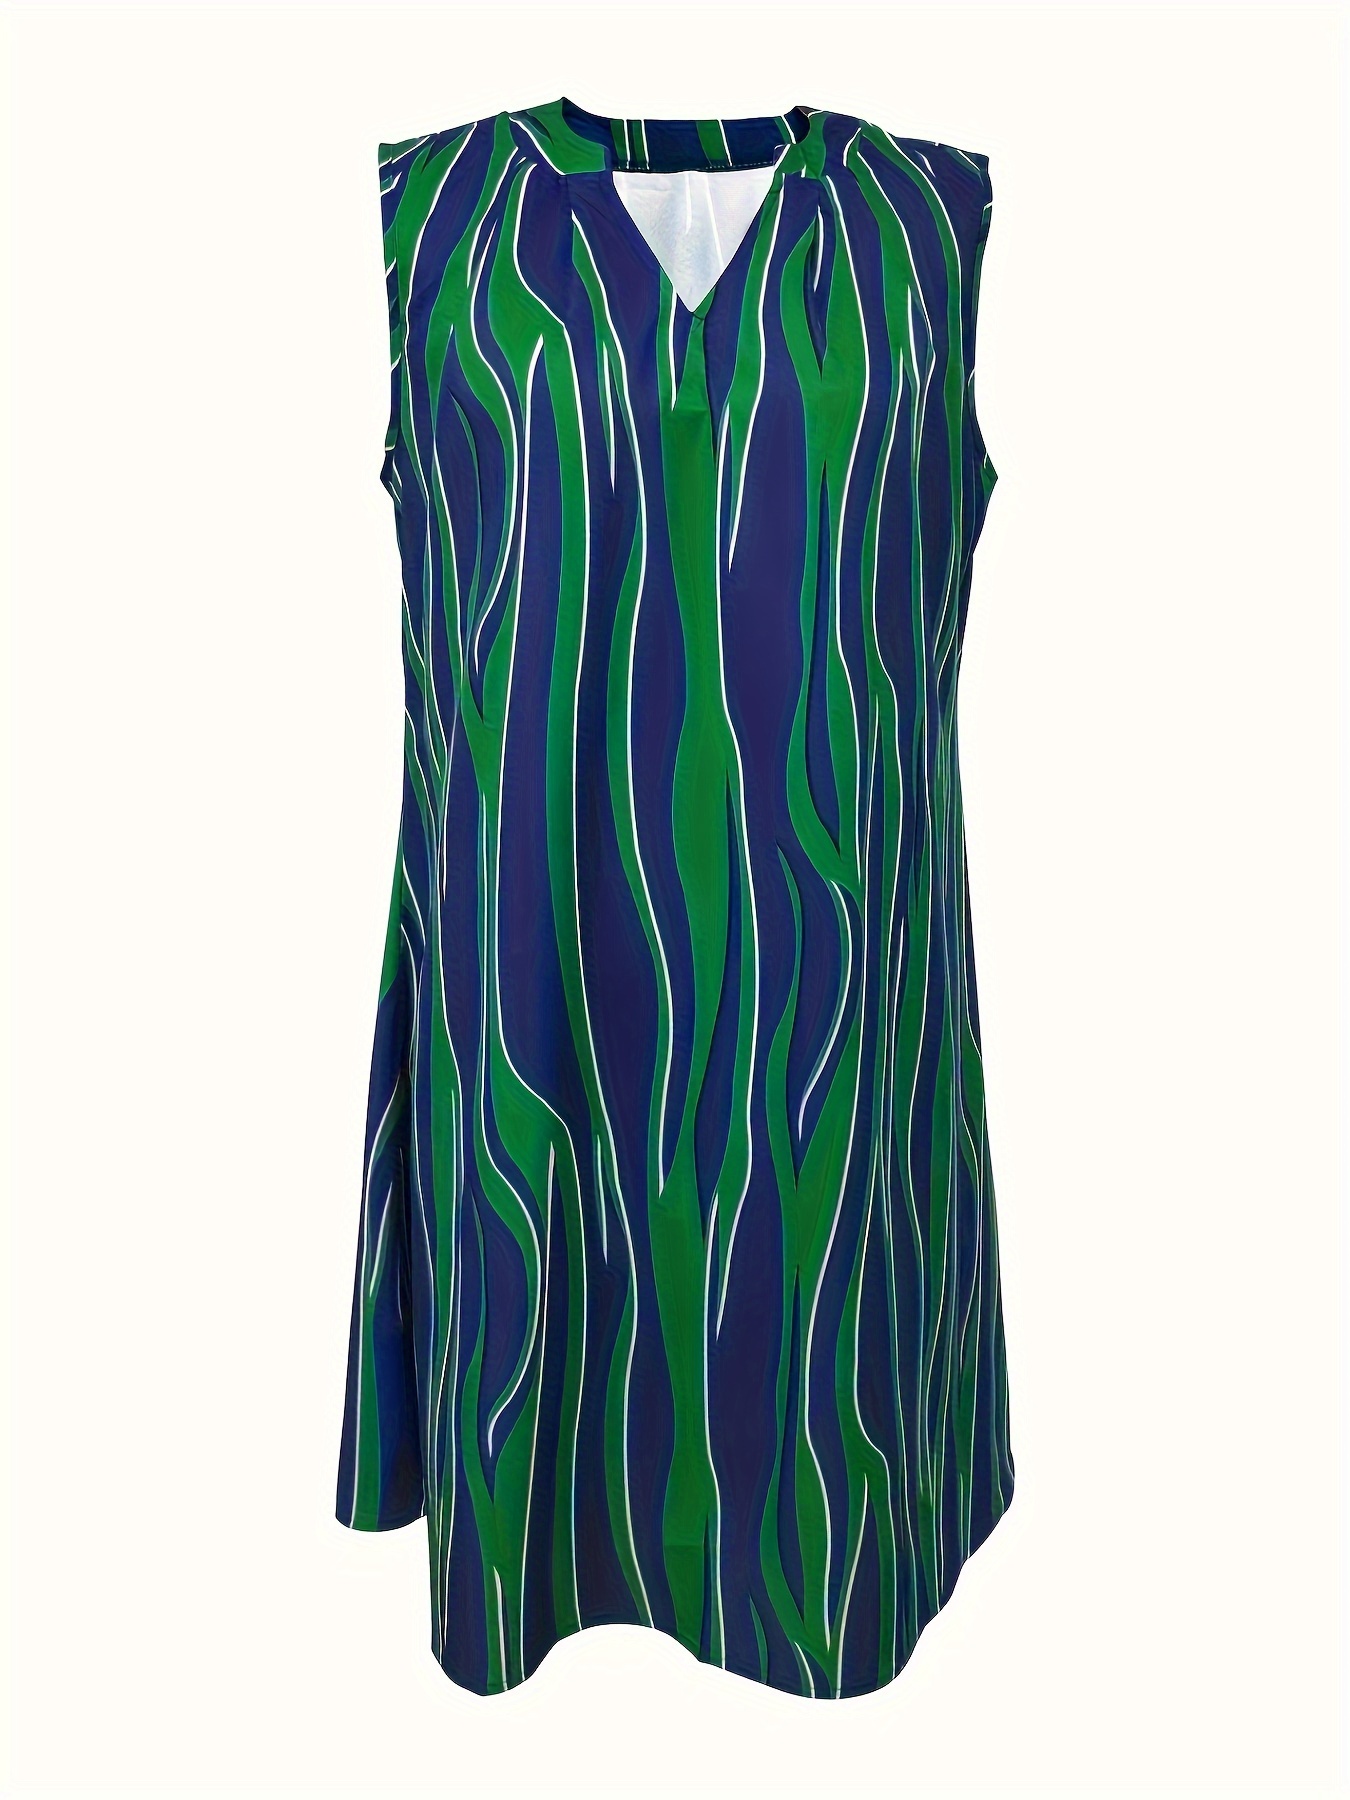 abstract ripple print dress casual v neck sleeveless dress womens clothing details 17